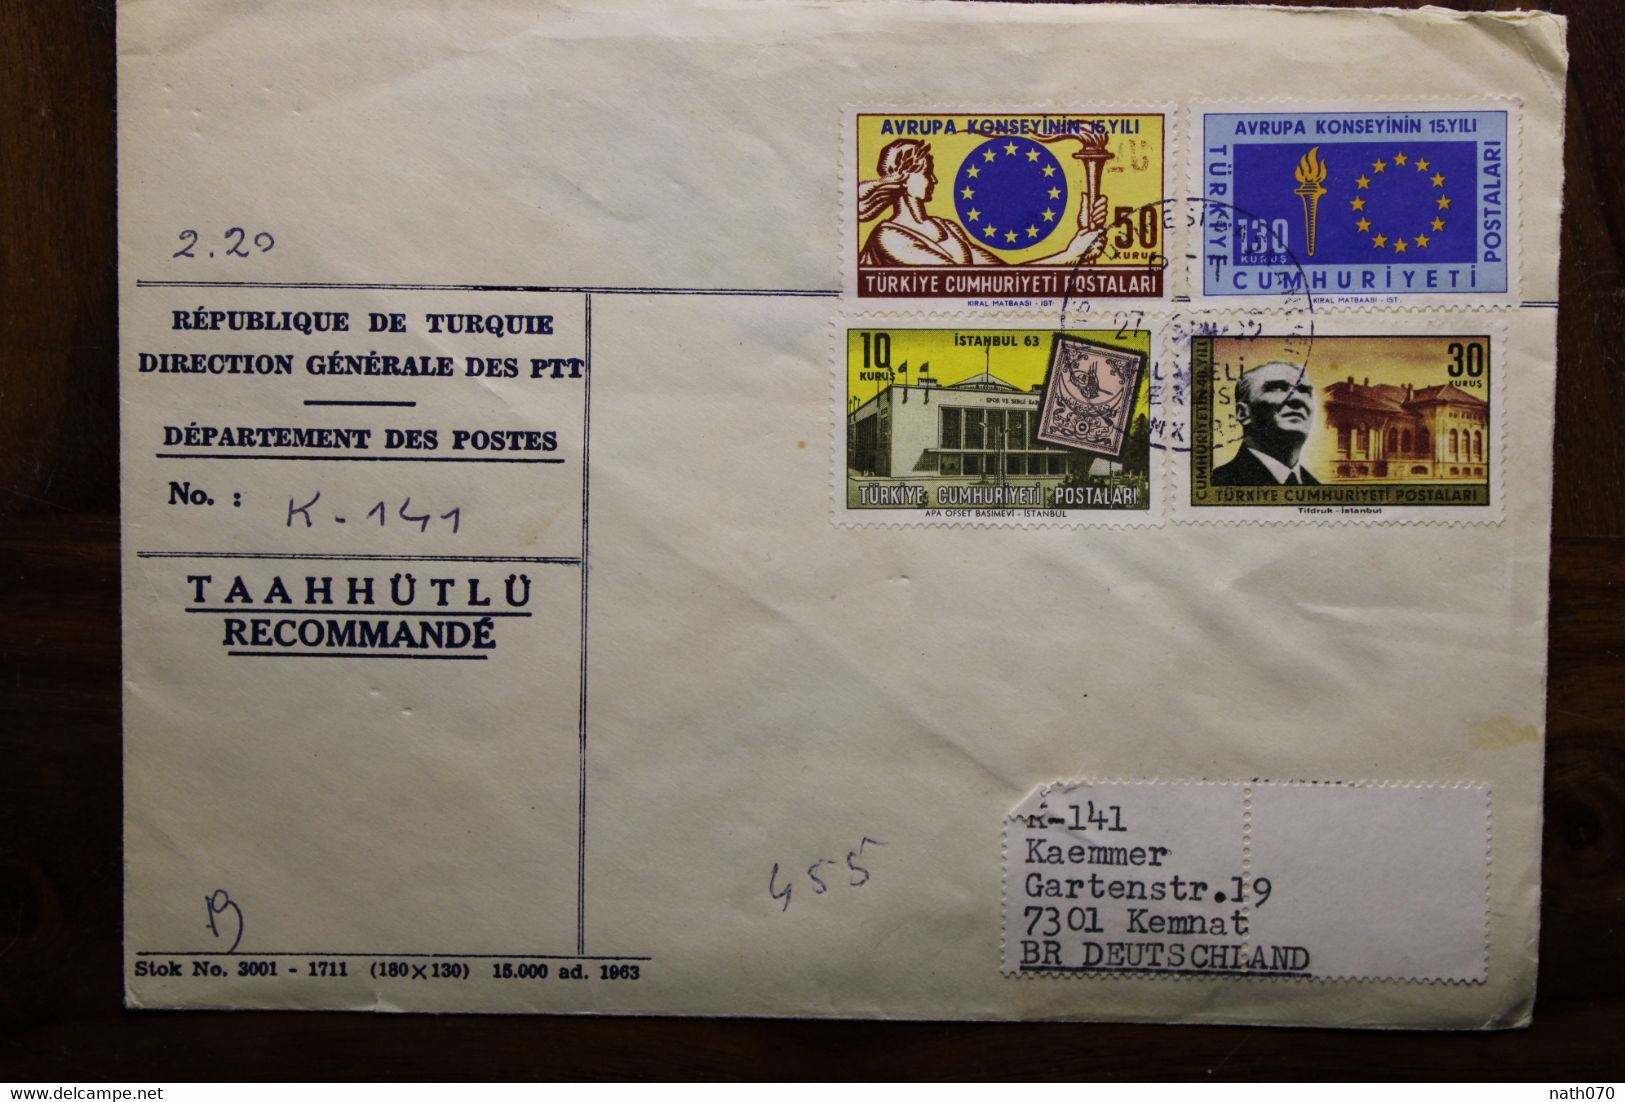 1963 Turquie Türkei Air Mail Cover Enveloppe Recommandé Par Avion Allemagne Europa - Briefe U. Dokumente